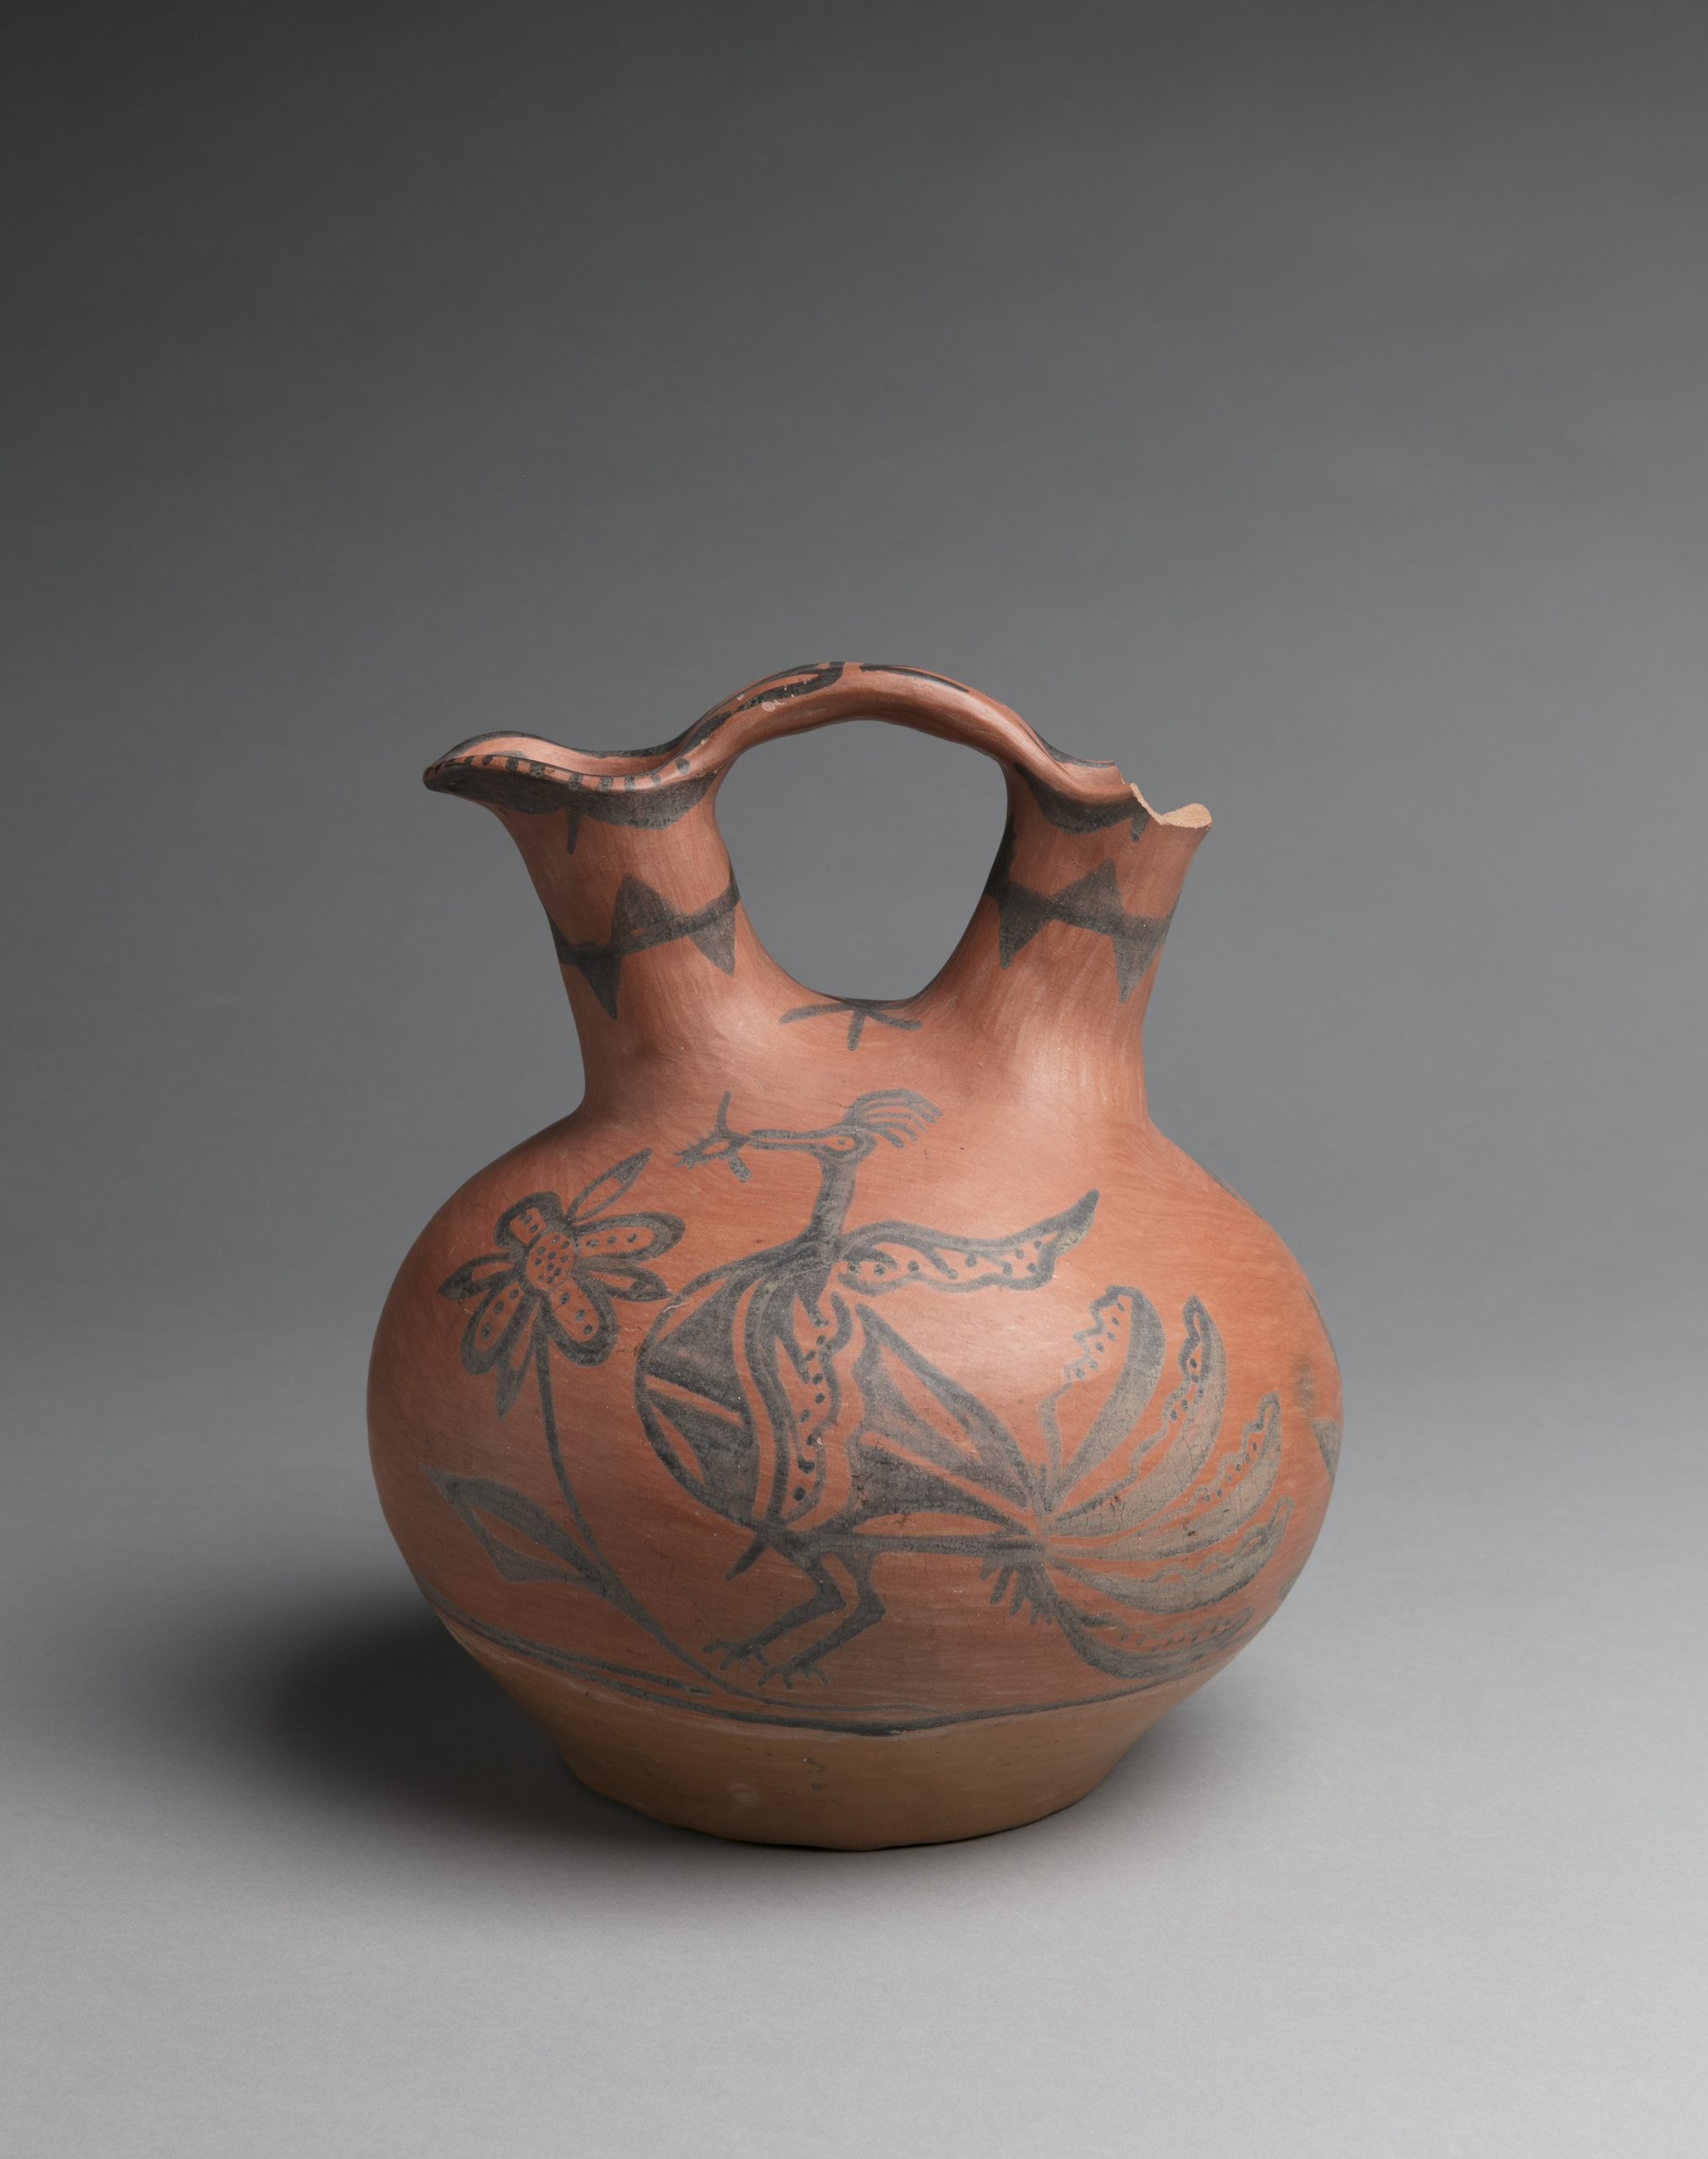 Wedding Vase, Artist unknown (San Ildefonso Pueblo), 1920, clay, paint, 10 ¾” x 9 ½”. Cat. no. IAF.2544. Photo by Addison Doty.